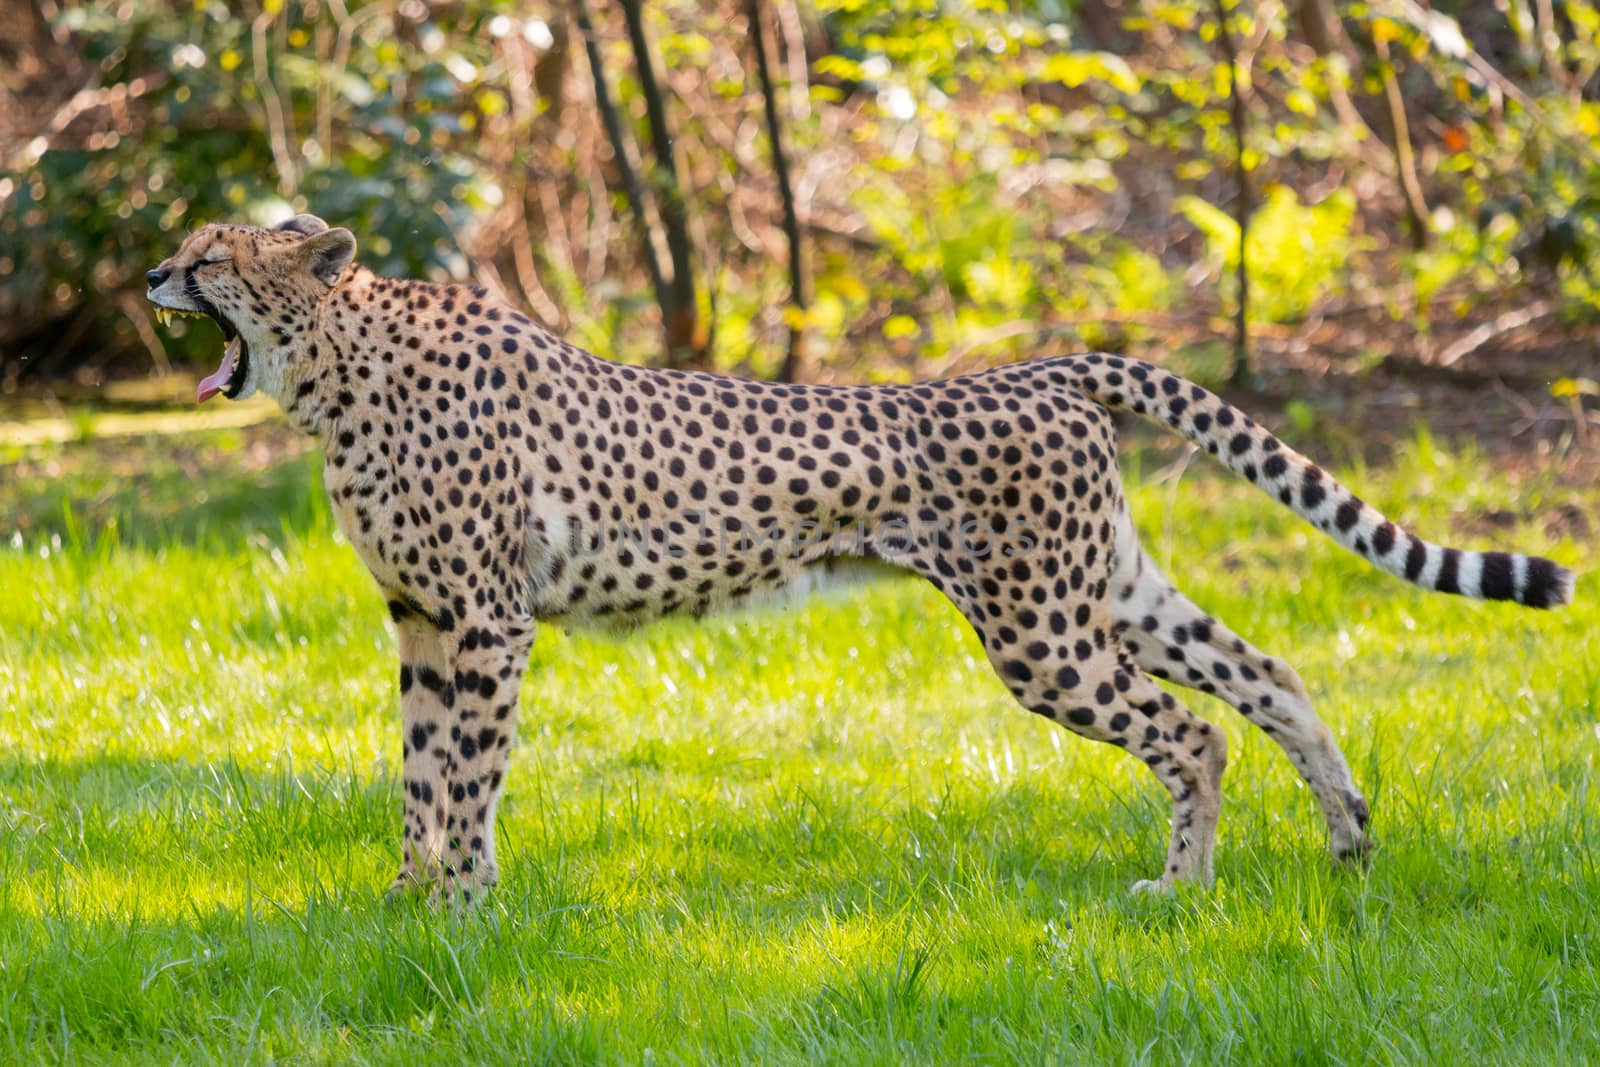 Yawning  Cheetah in the savannah - animal in wildlife 